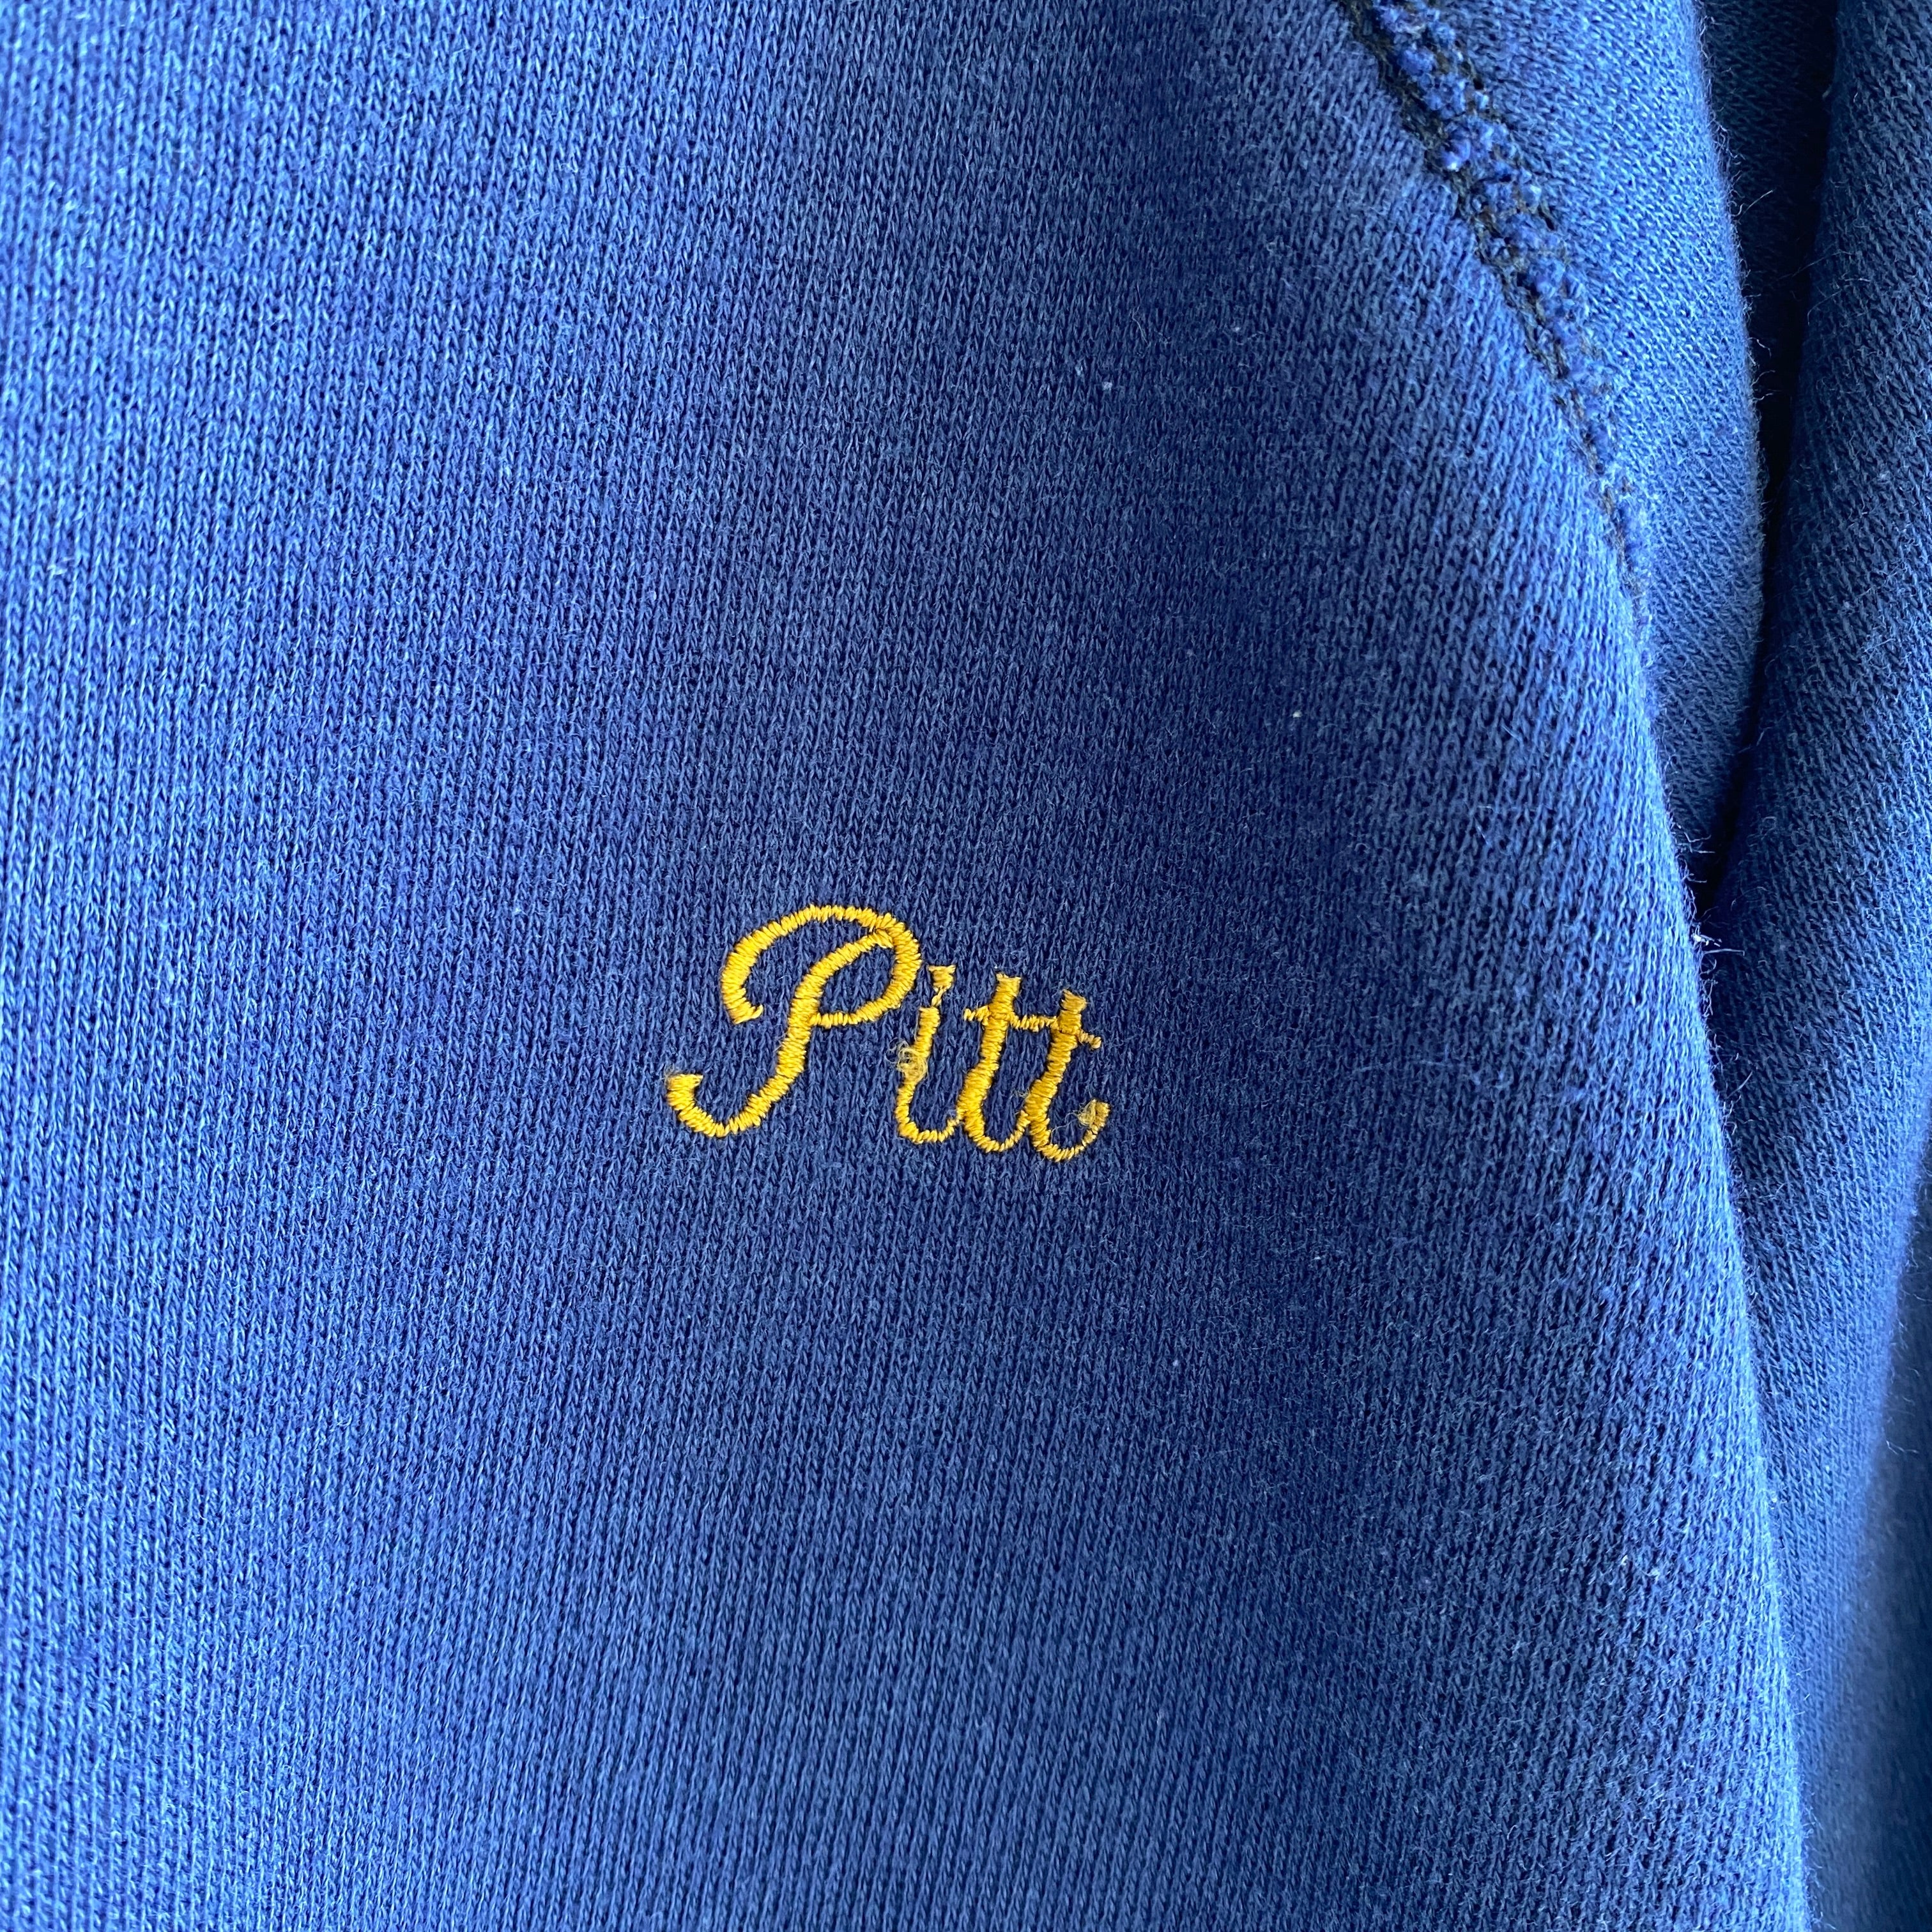 1970s Pitt Raglan Soft and Slouchy Sweatshirt